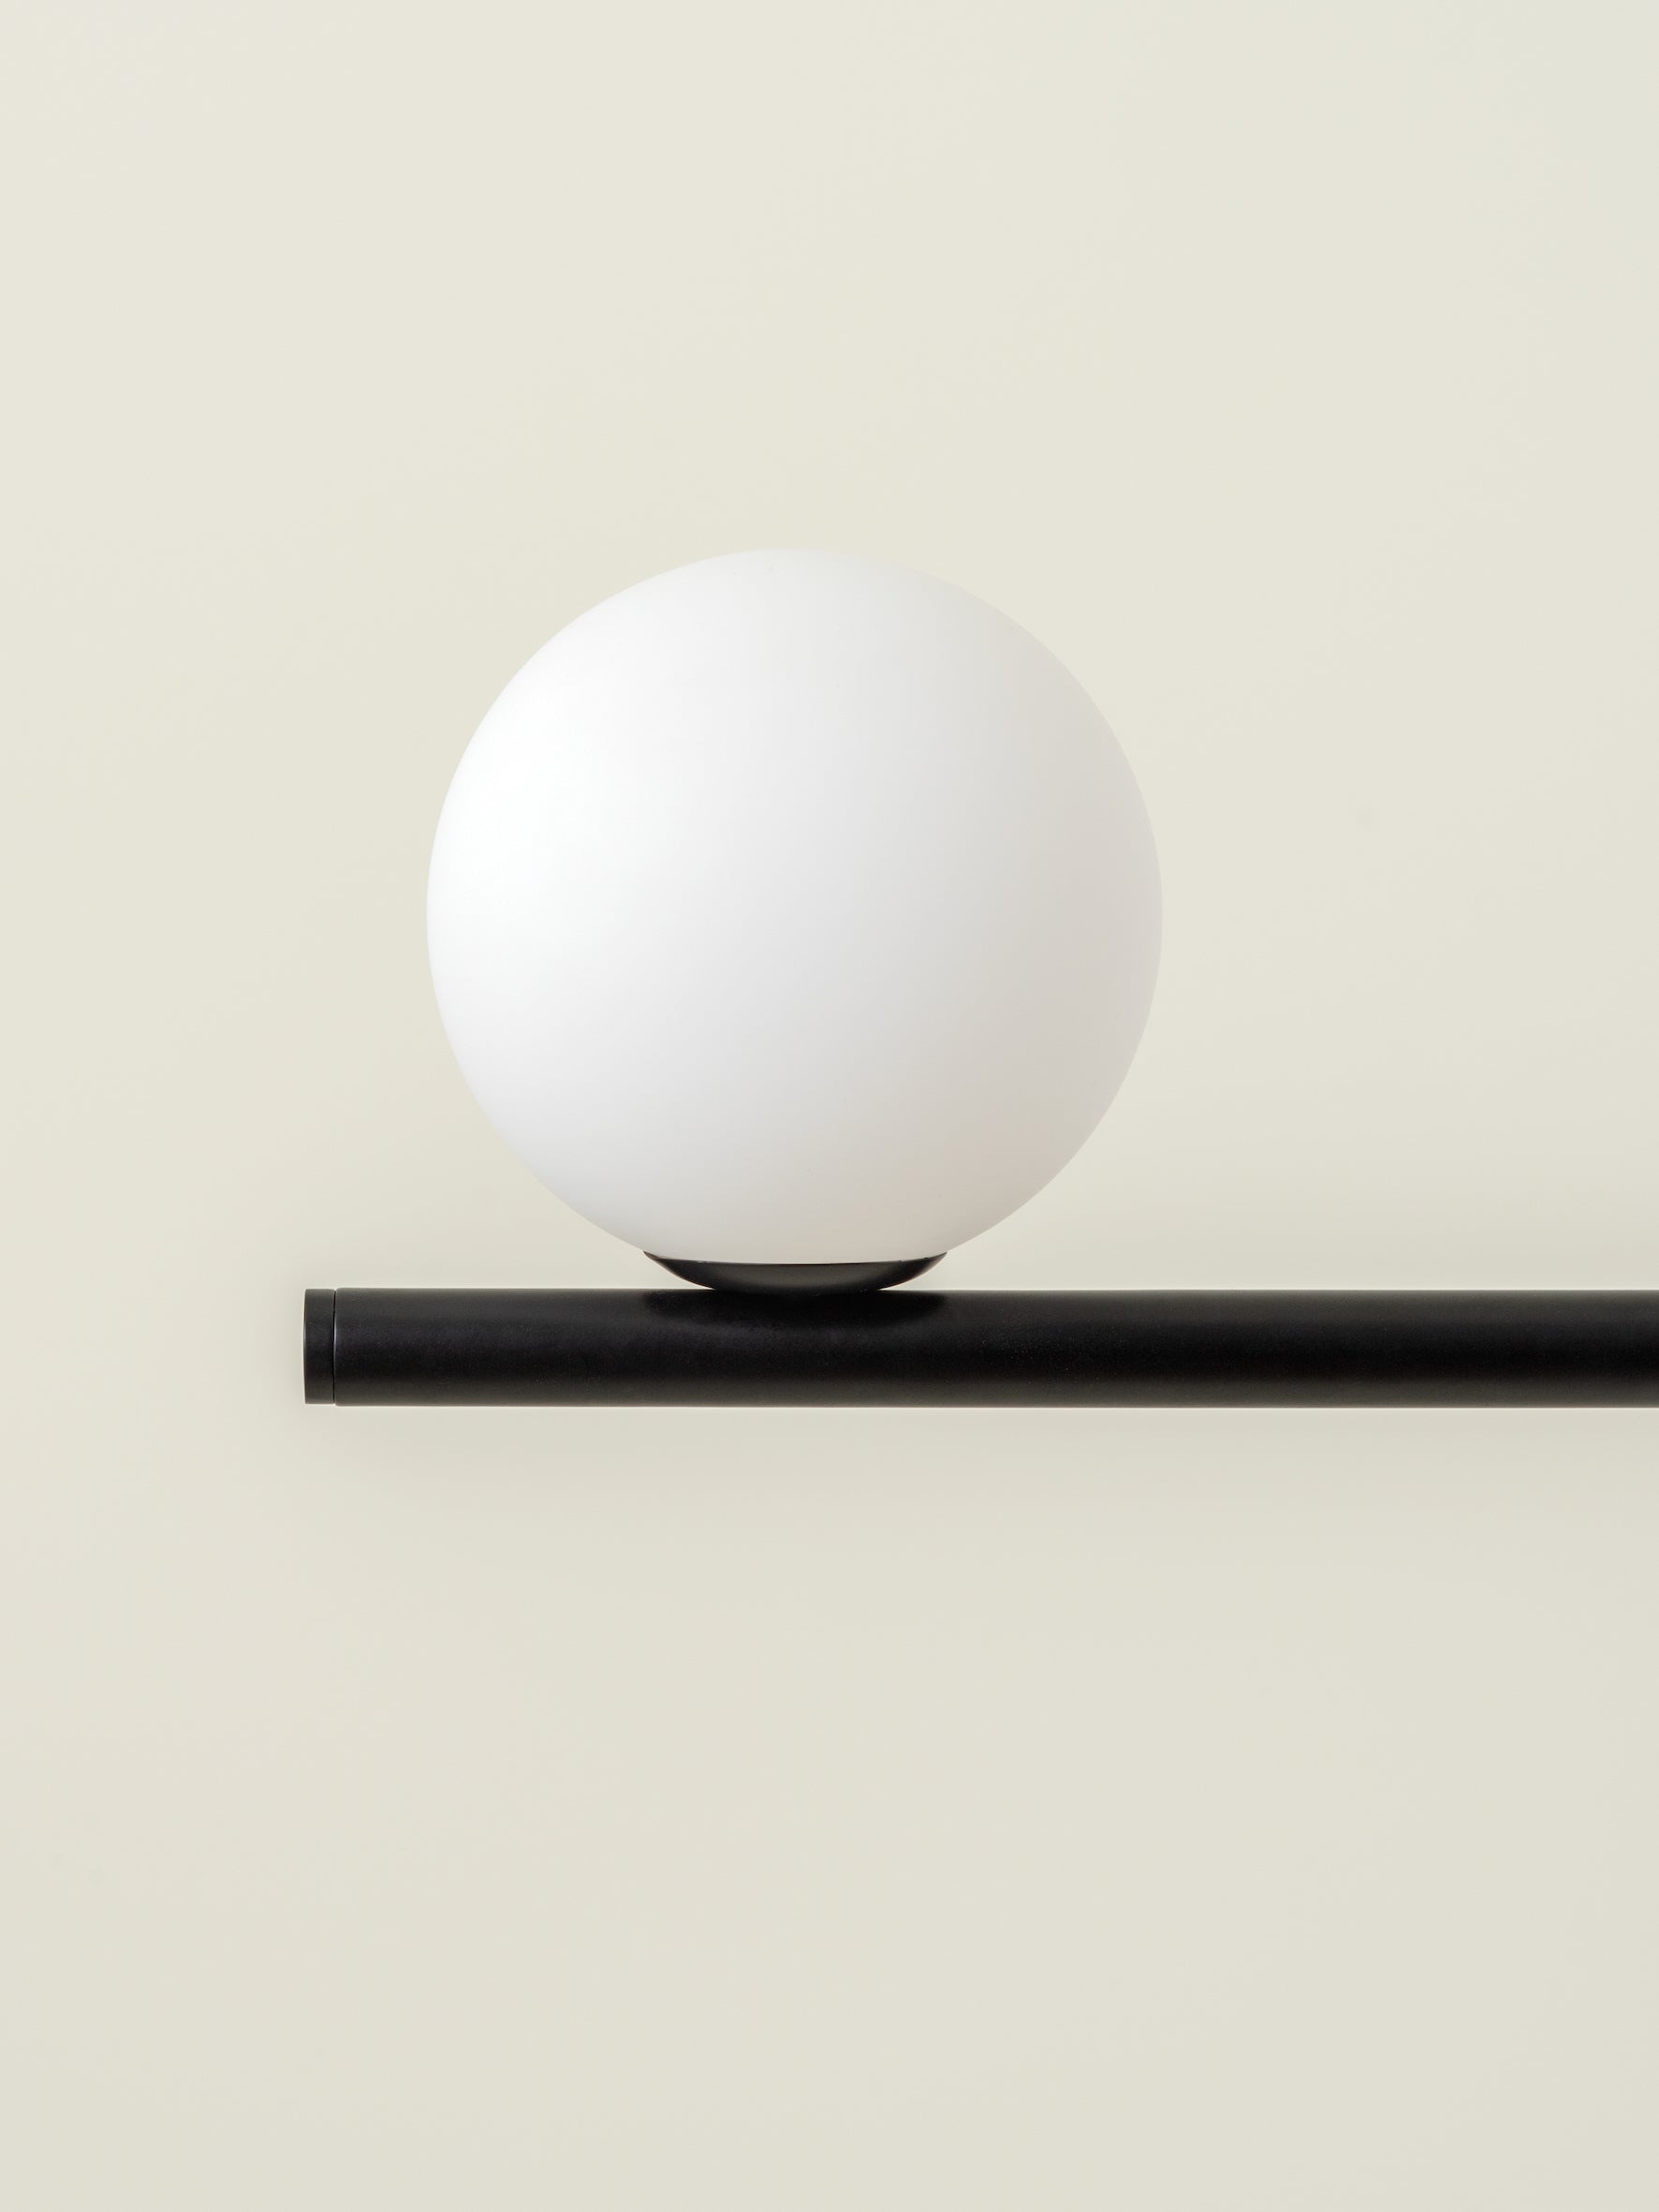 Perch - 4 light matt black and opal pendant bar | Ceiling Light | Lights & Lamps | UK | Modern Affordable Designer Lighting